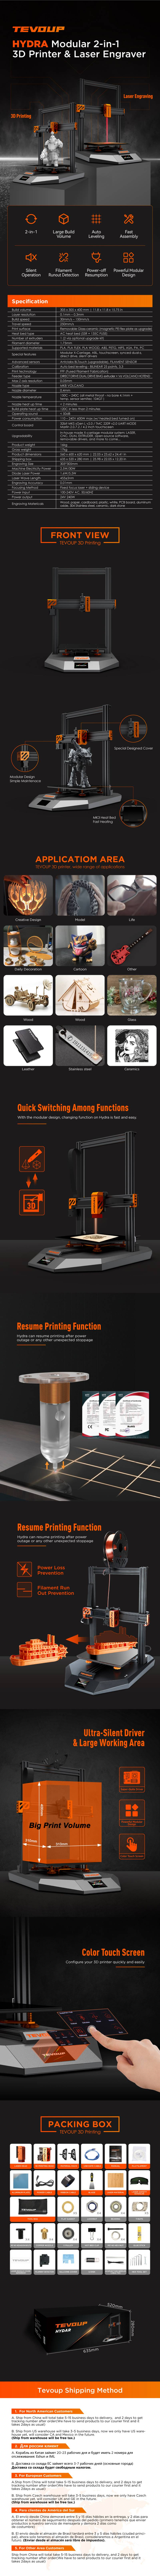 TEVOUP-HYDRA-Modular-2-in-1-3D-Printer--Laser-Engraver-Kit-305305400mm-1970172-1